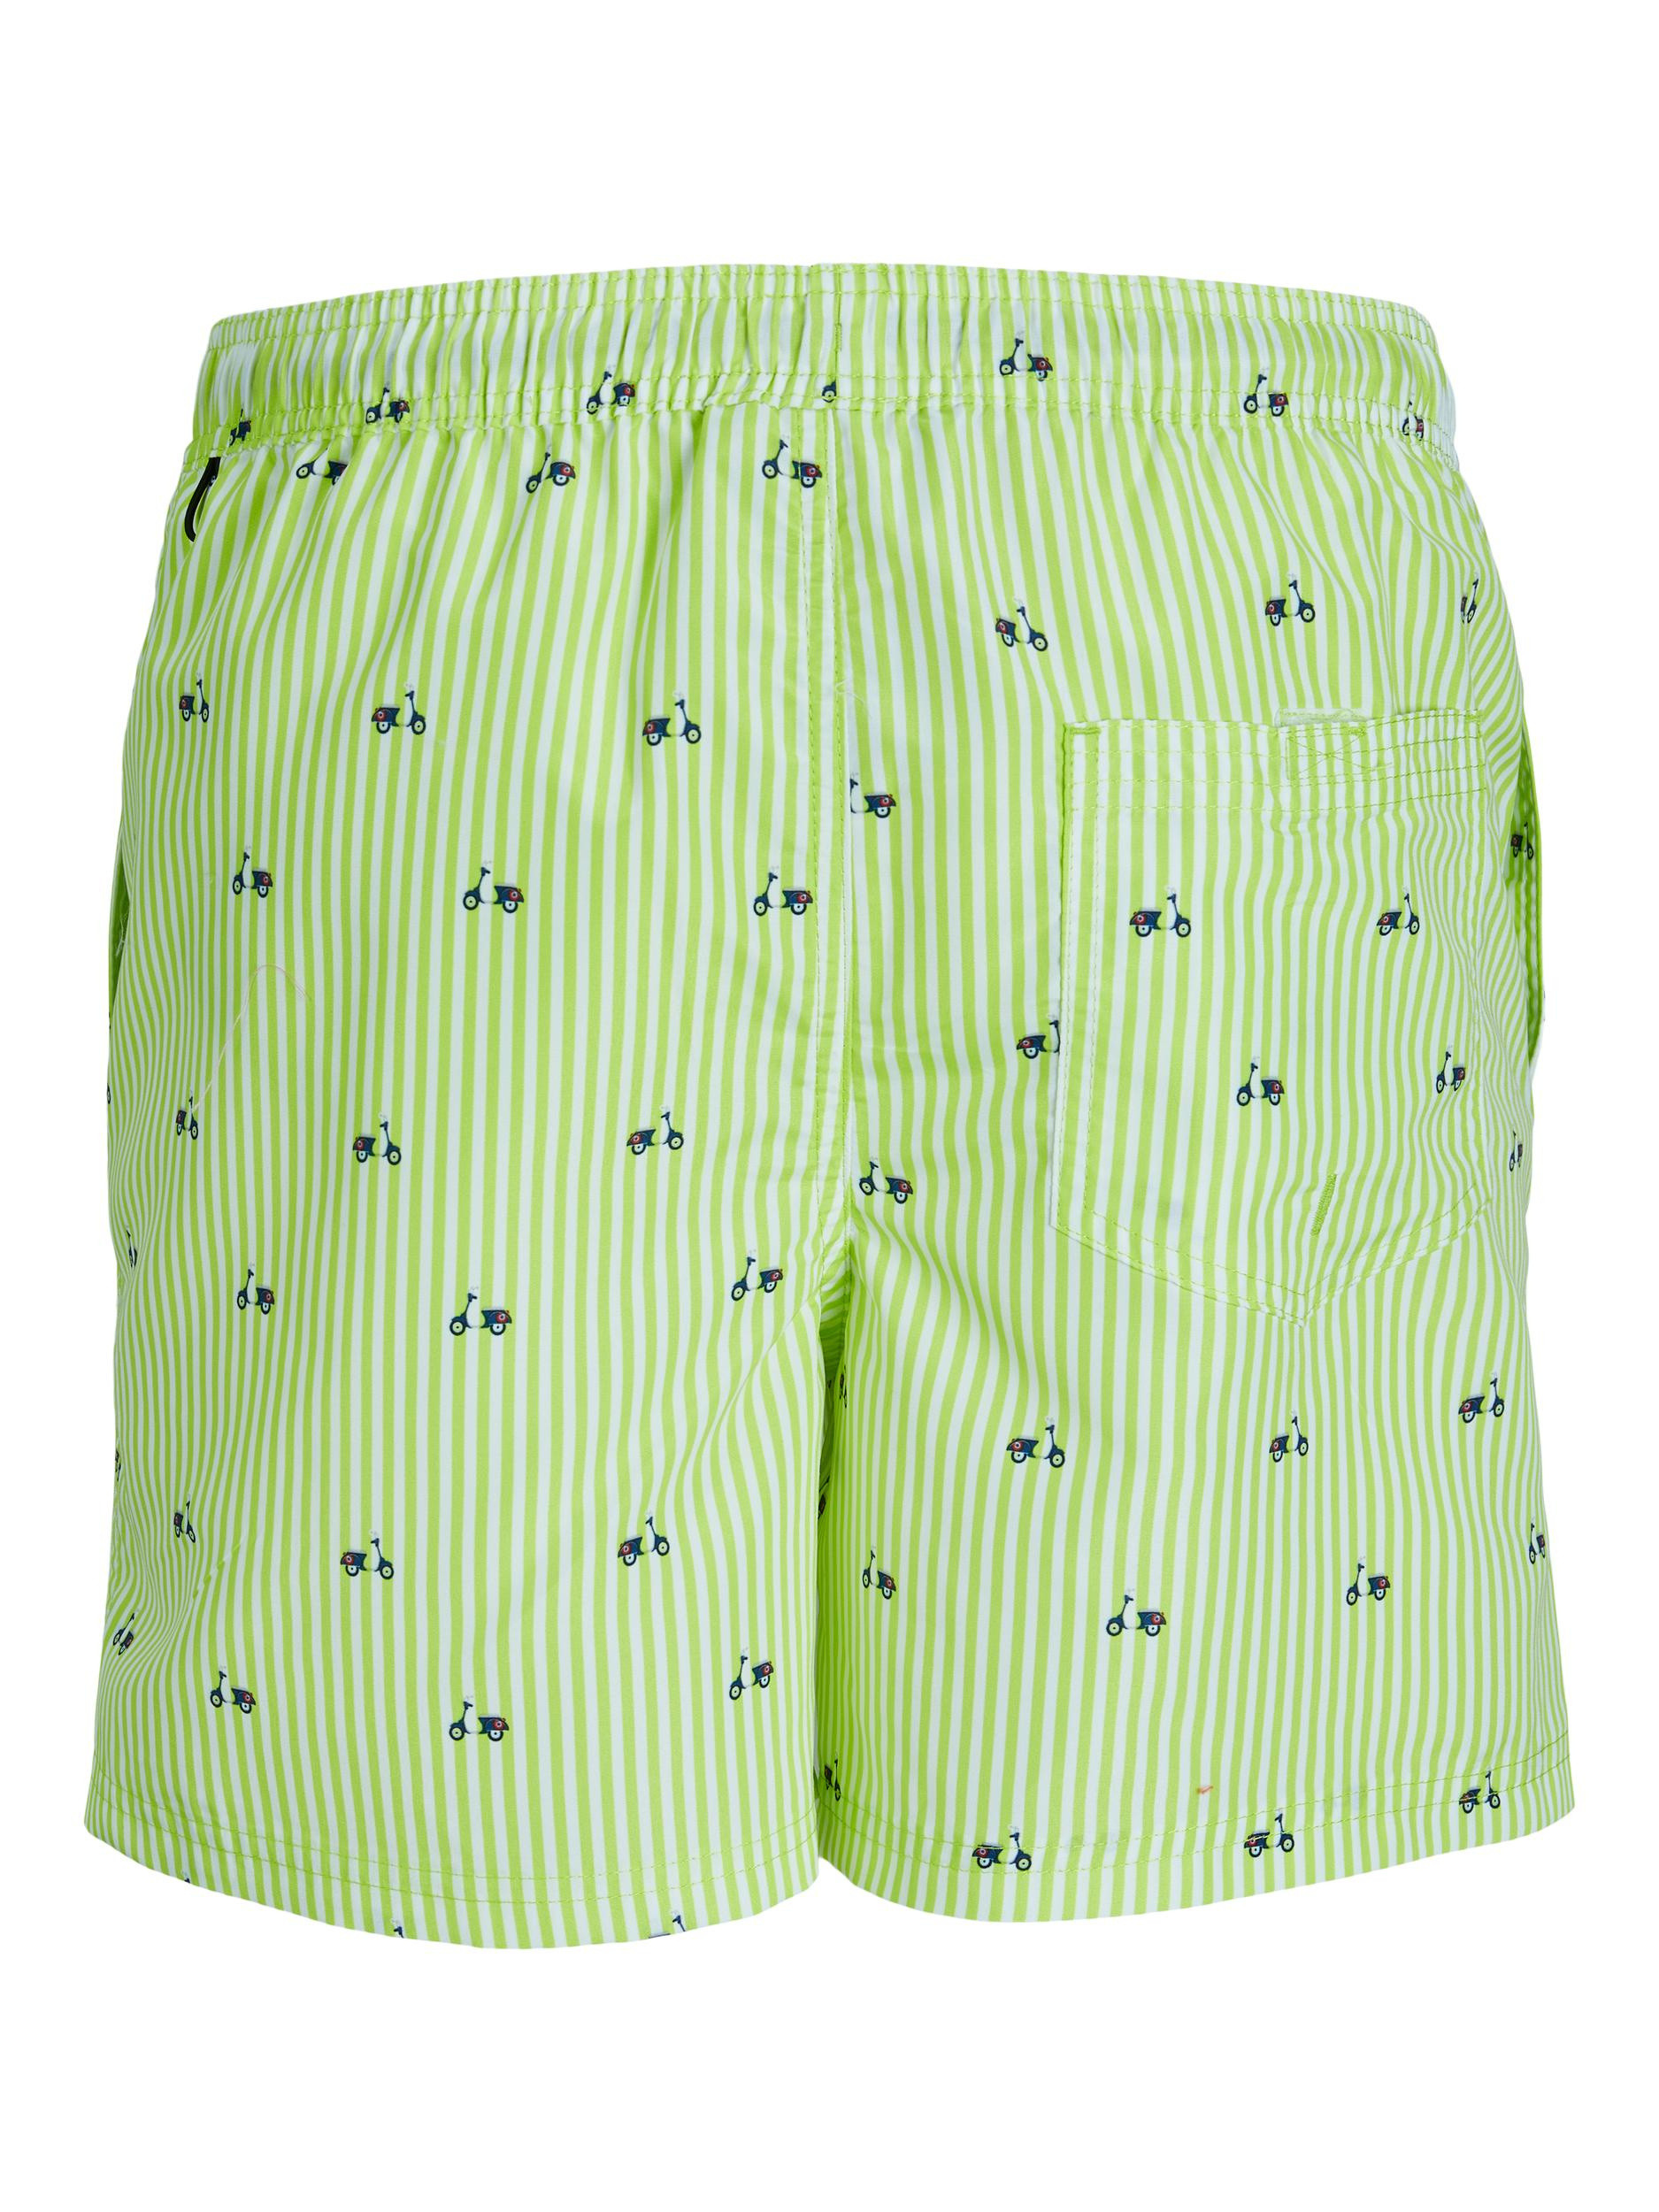 Jack & Jones - Regular fit striped swim trunks with print, Lime Green, large image number 1